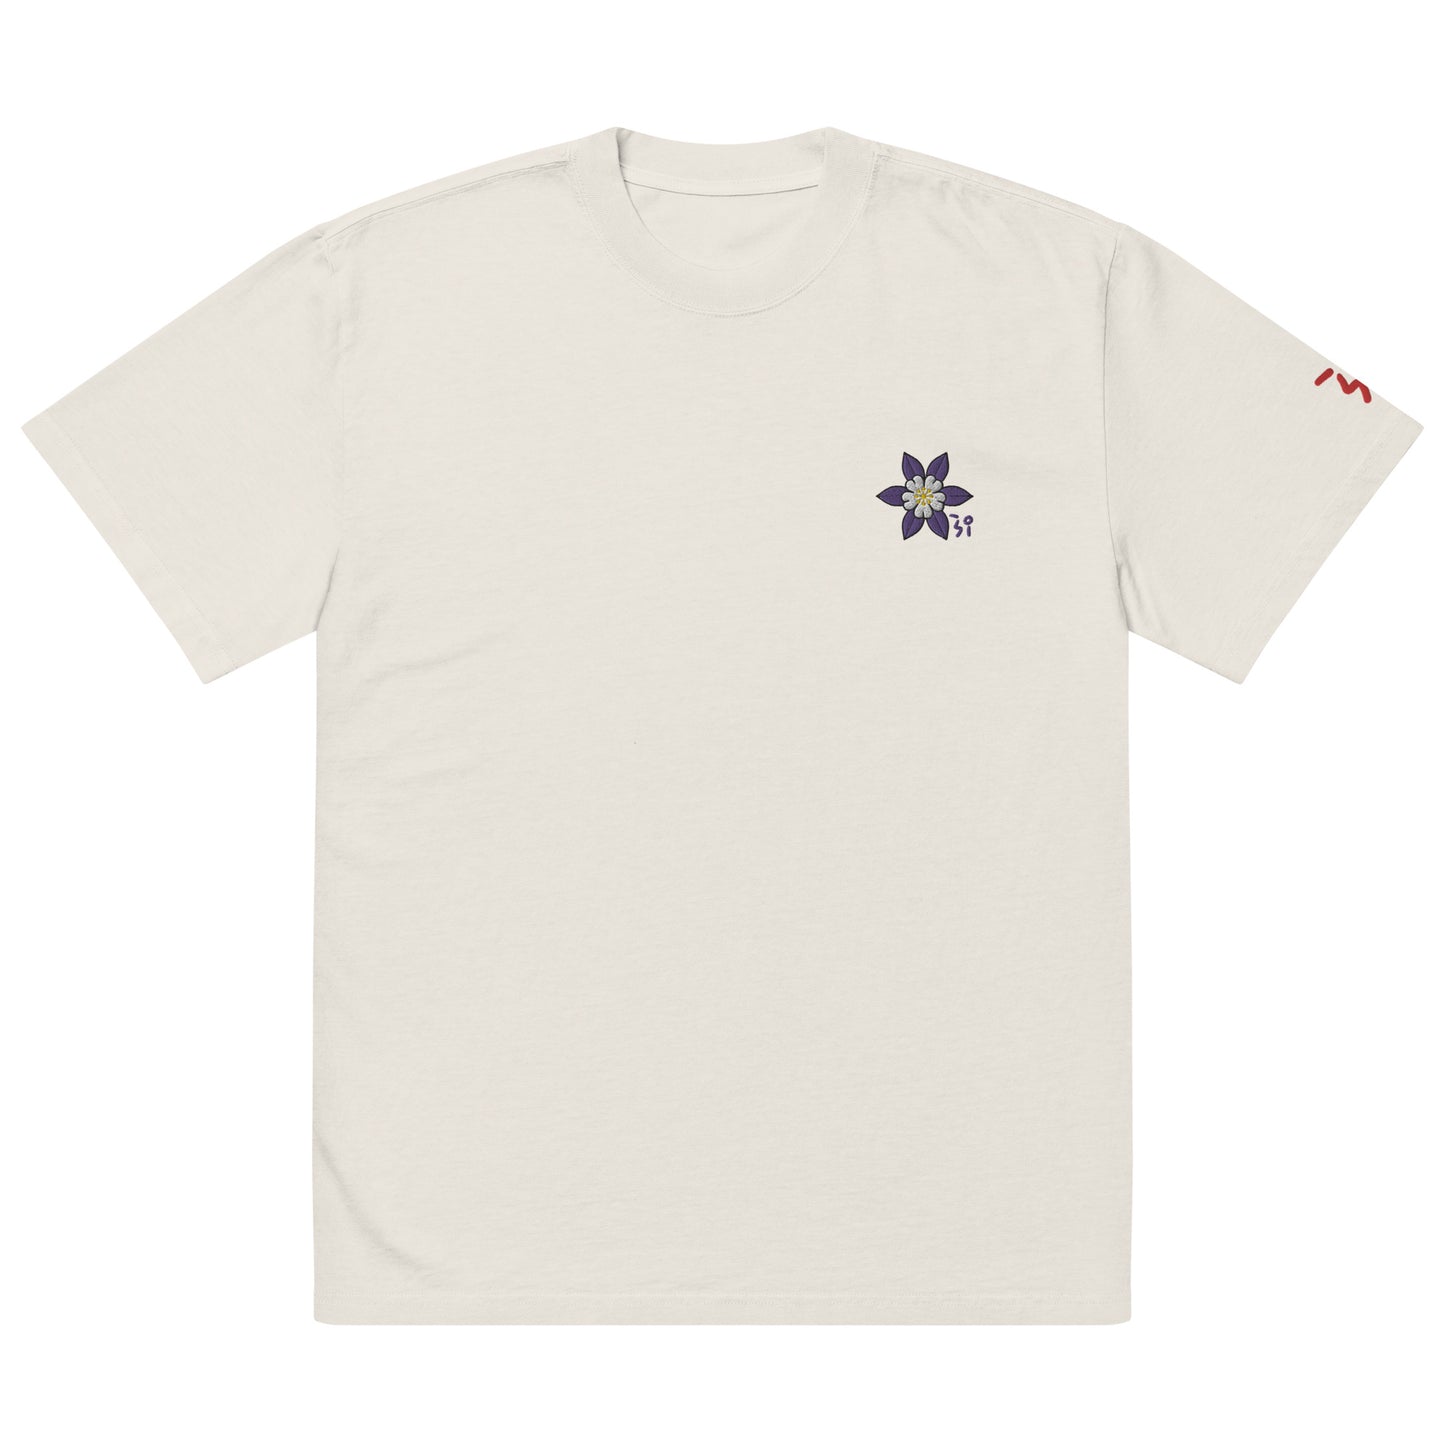 Columbine Oversized faded t-shirt